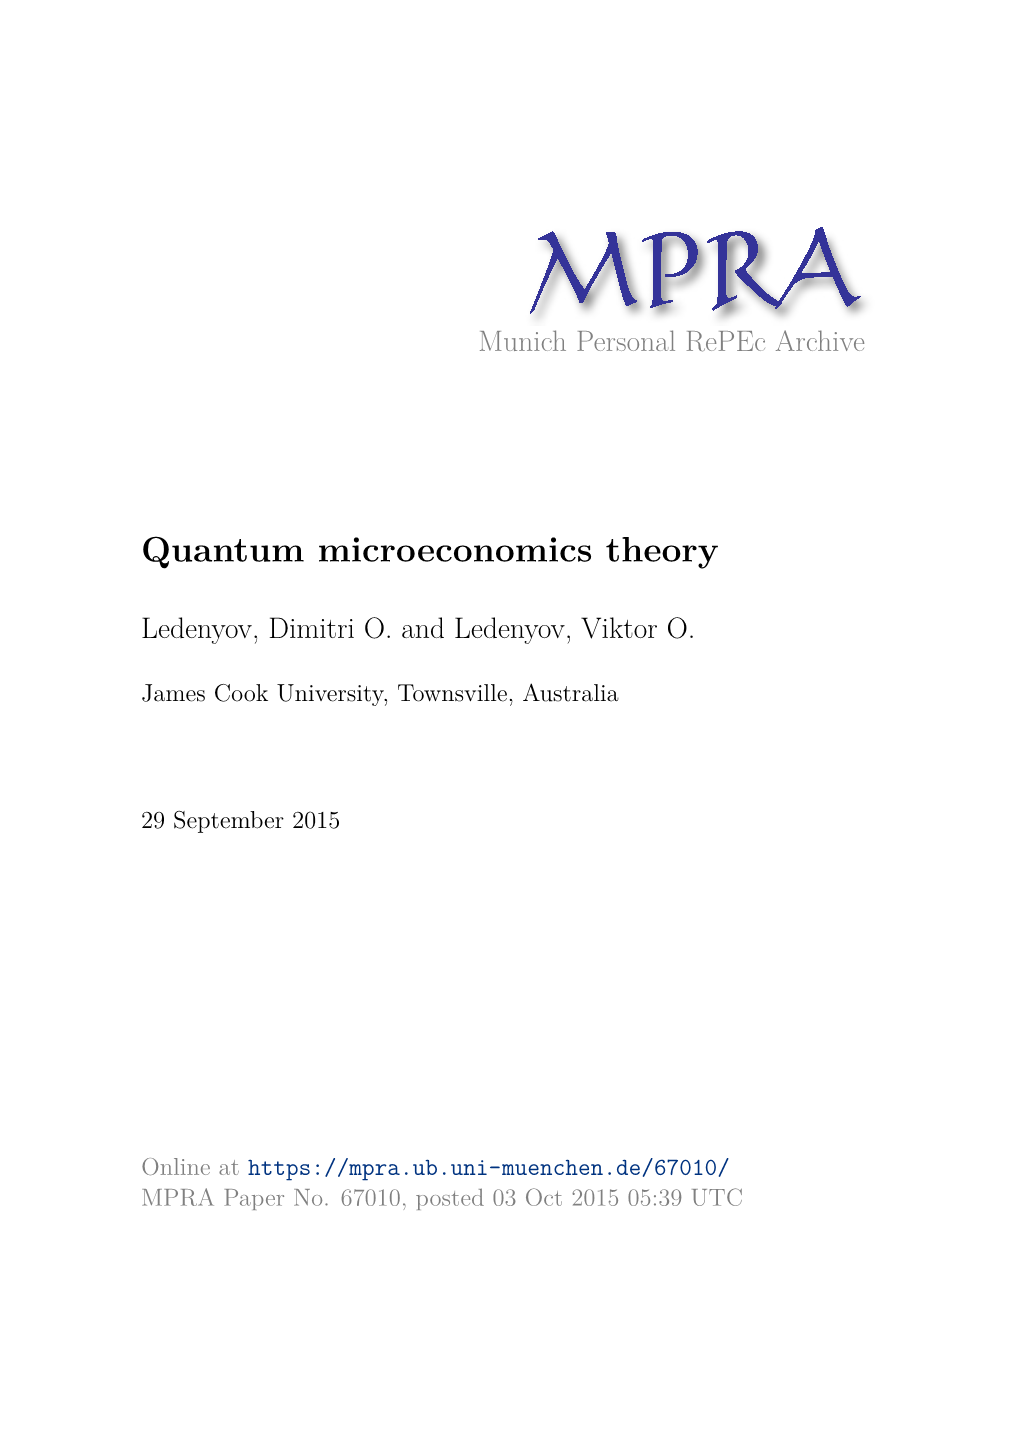 Quantum Microeconomics Theory